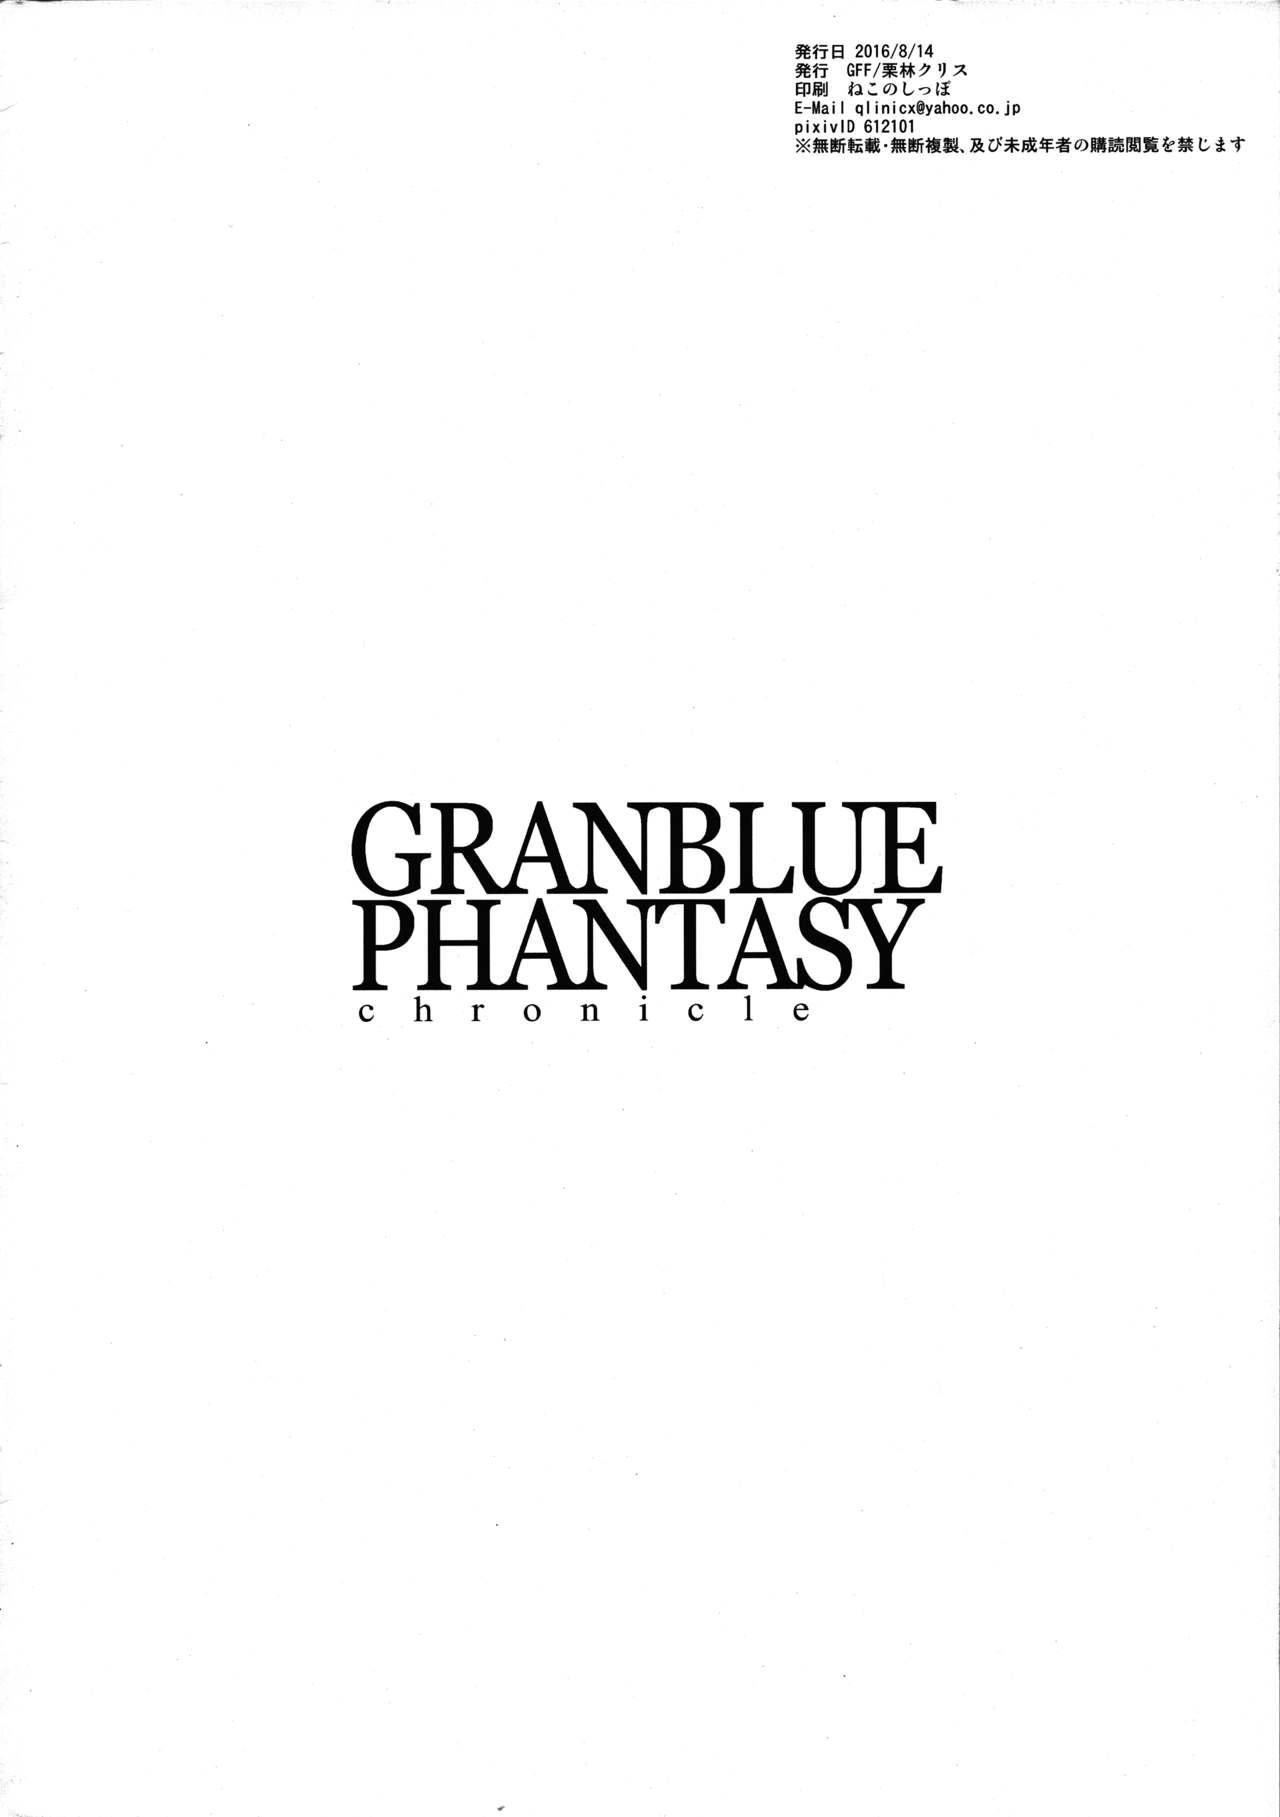 GRANBLUE PHANTASY chronicle Vol. 01 8